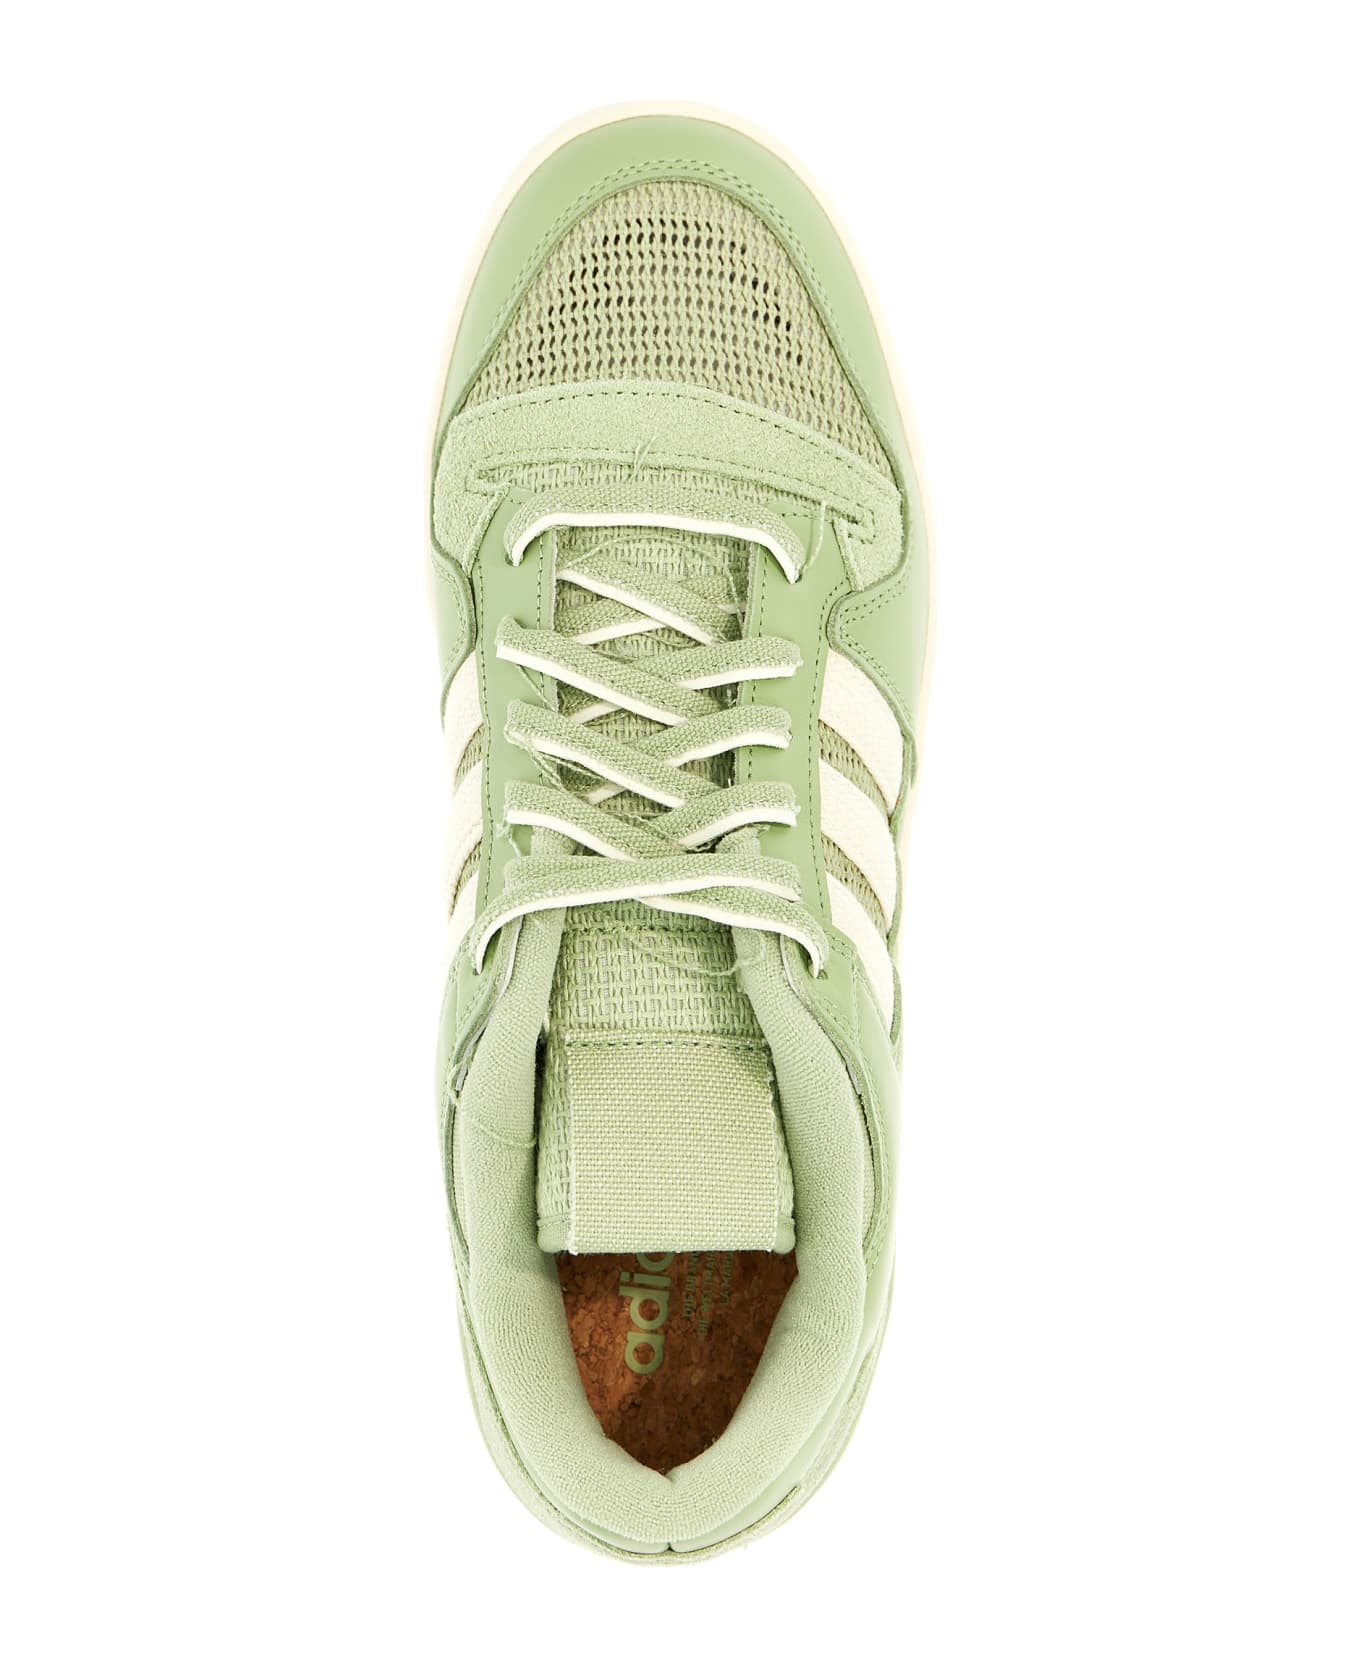 Adidas Originals Forum 84 Low Sneakers - Green